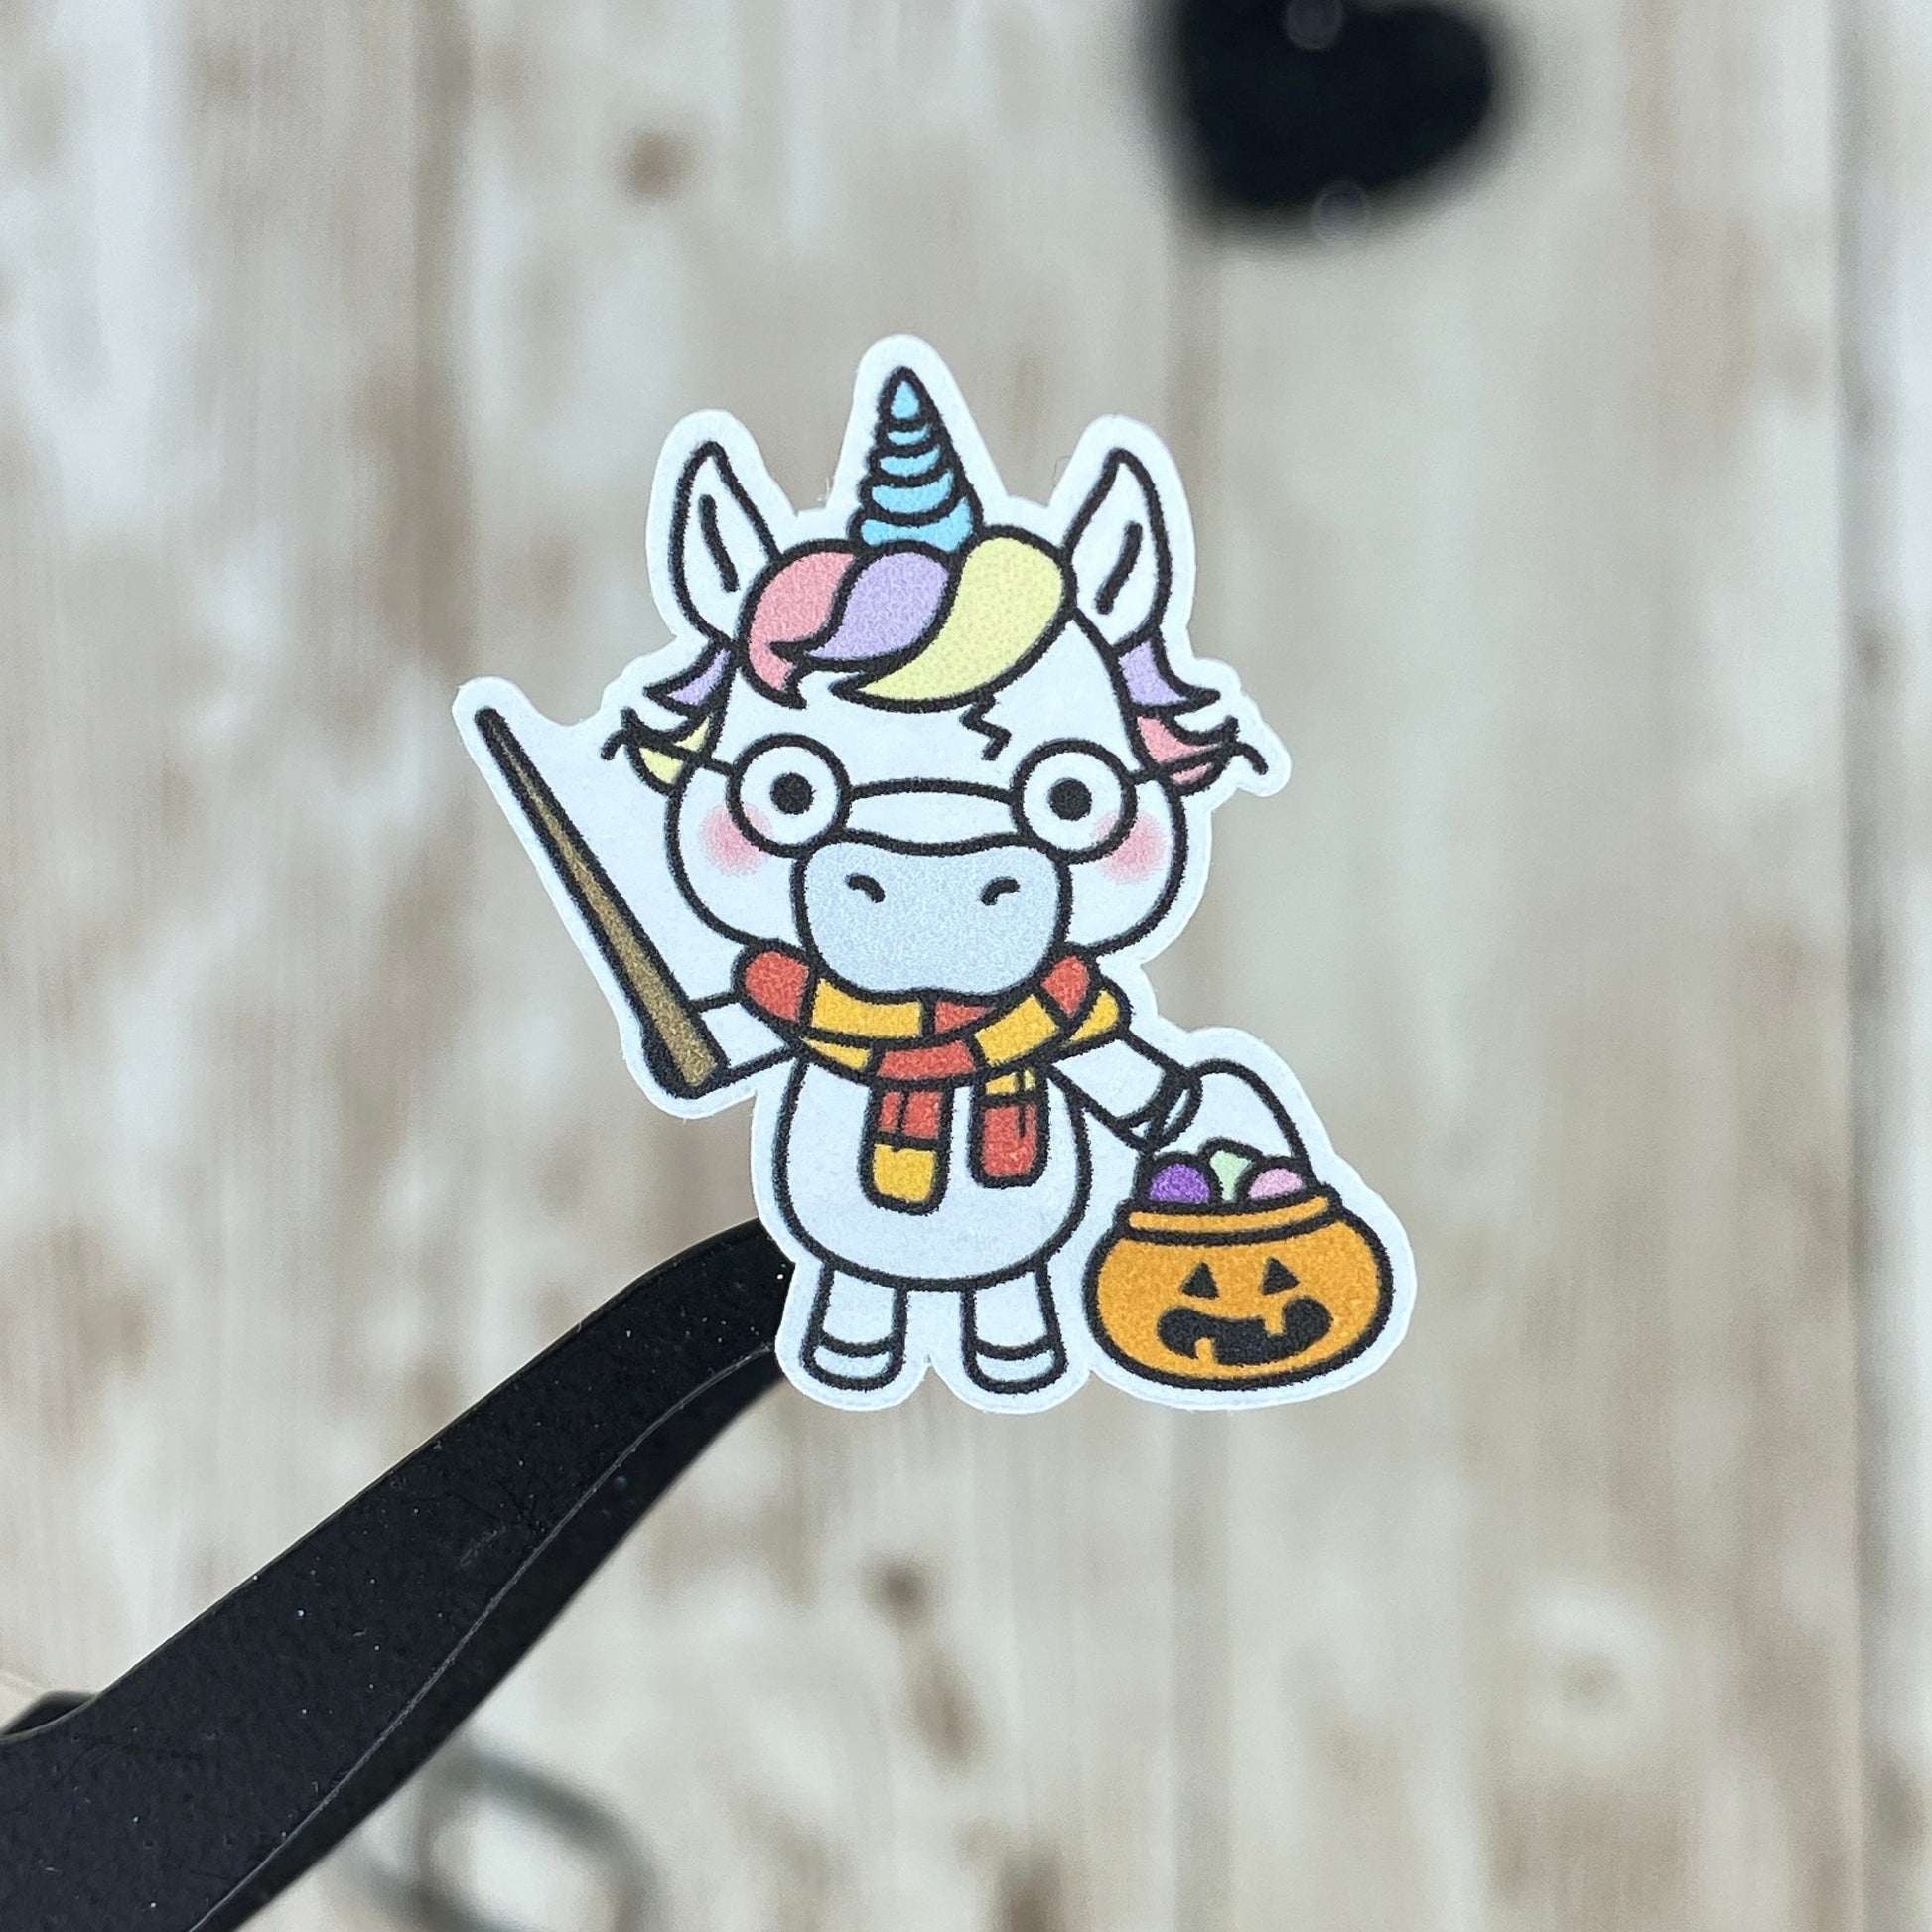 Halloween Unicorn Planner Stickers